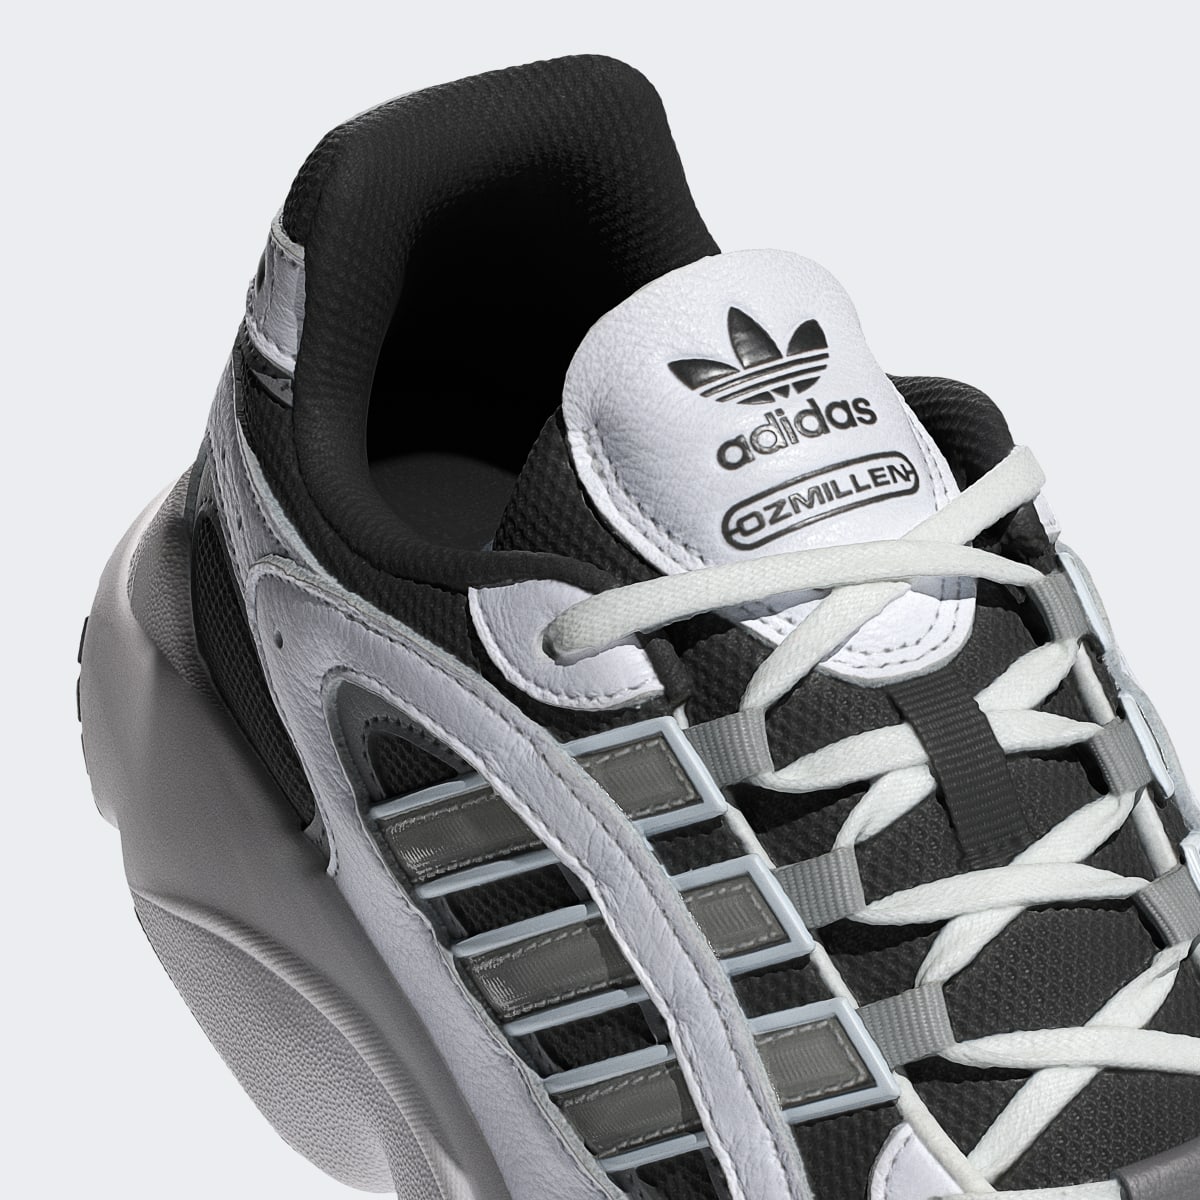 Adidas OZMILLEN Shoes. 10